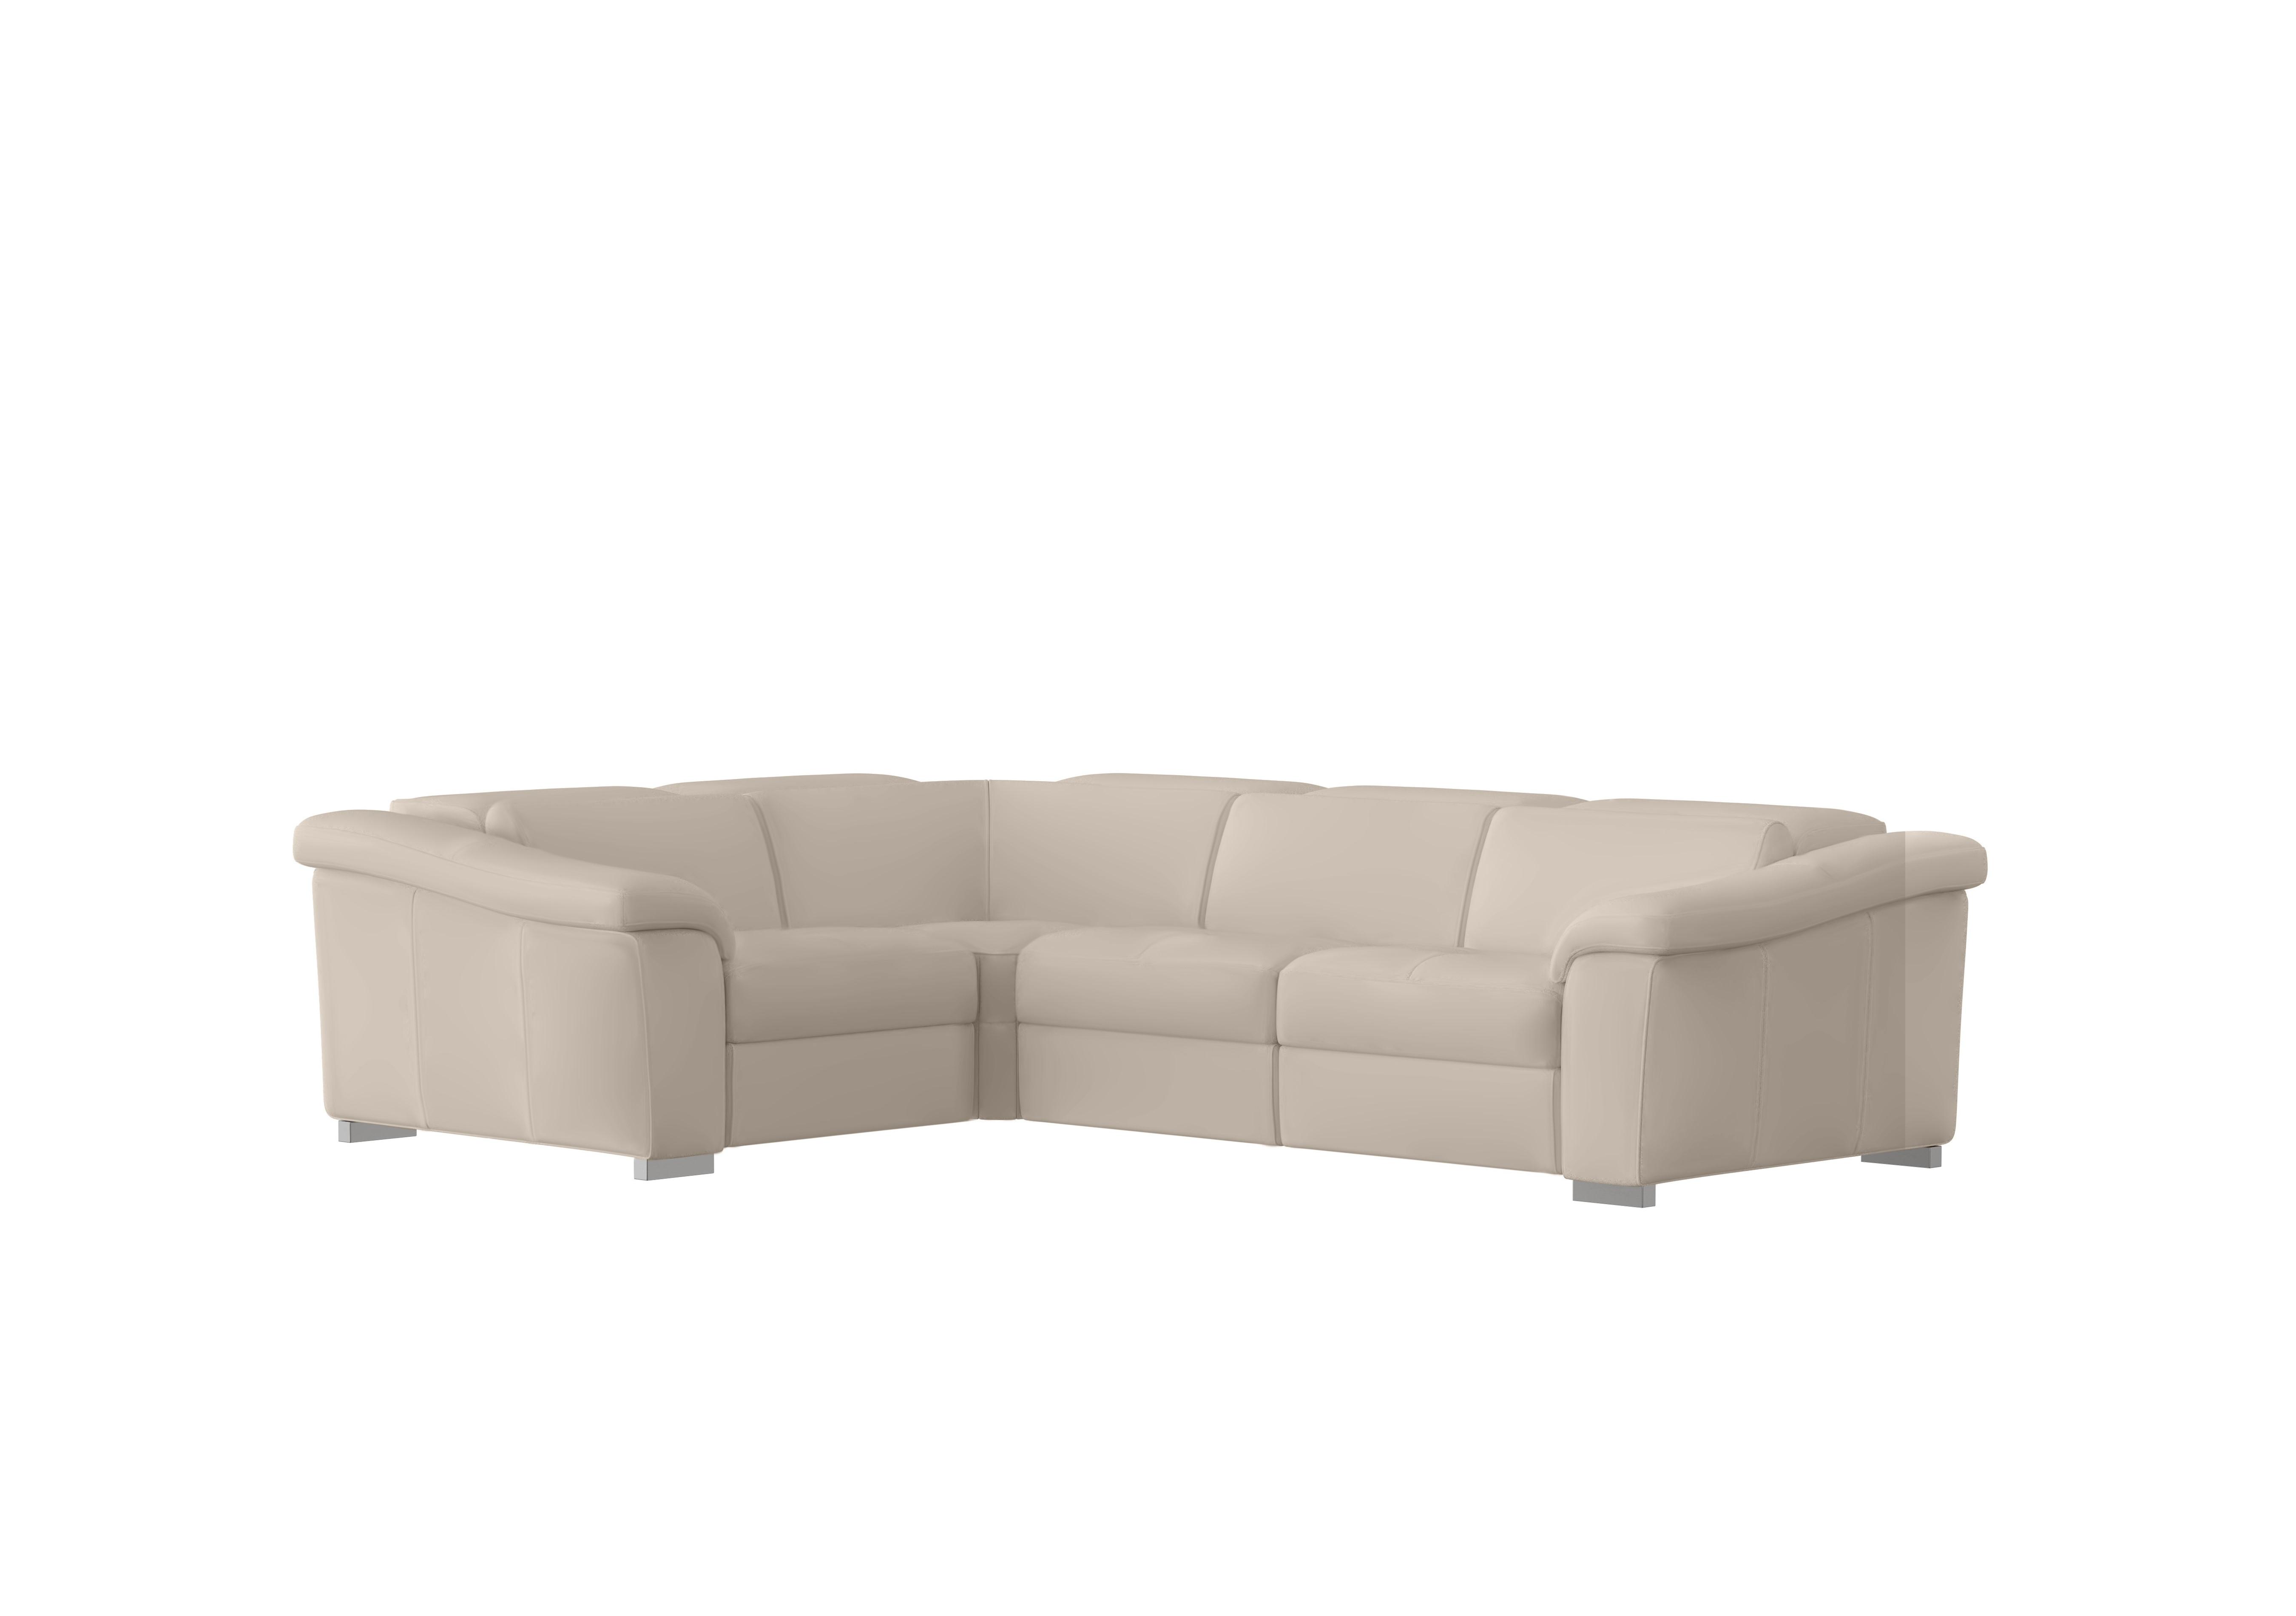 Galileo Leather Corner Sofa in Botero Crema 2156 Ch on Furniture Village